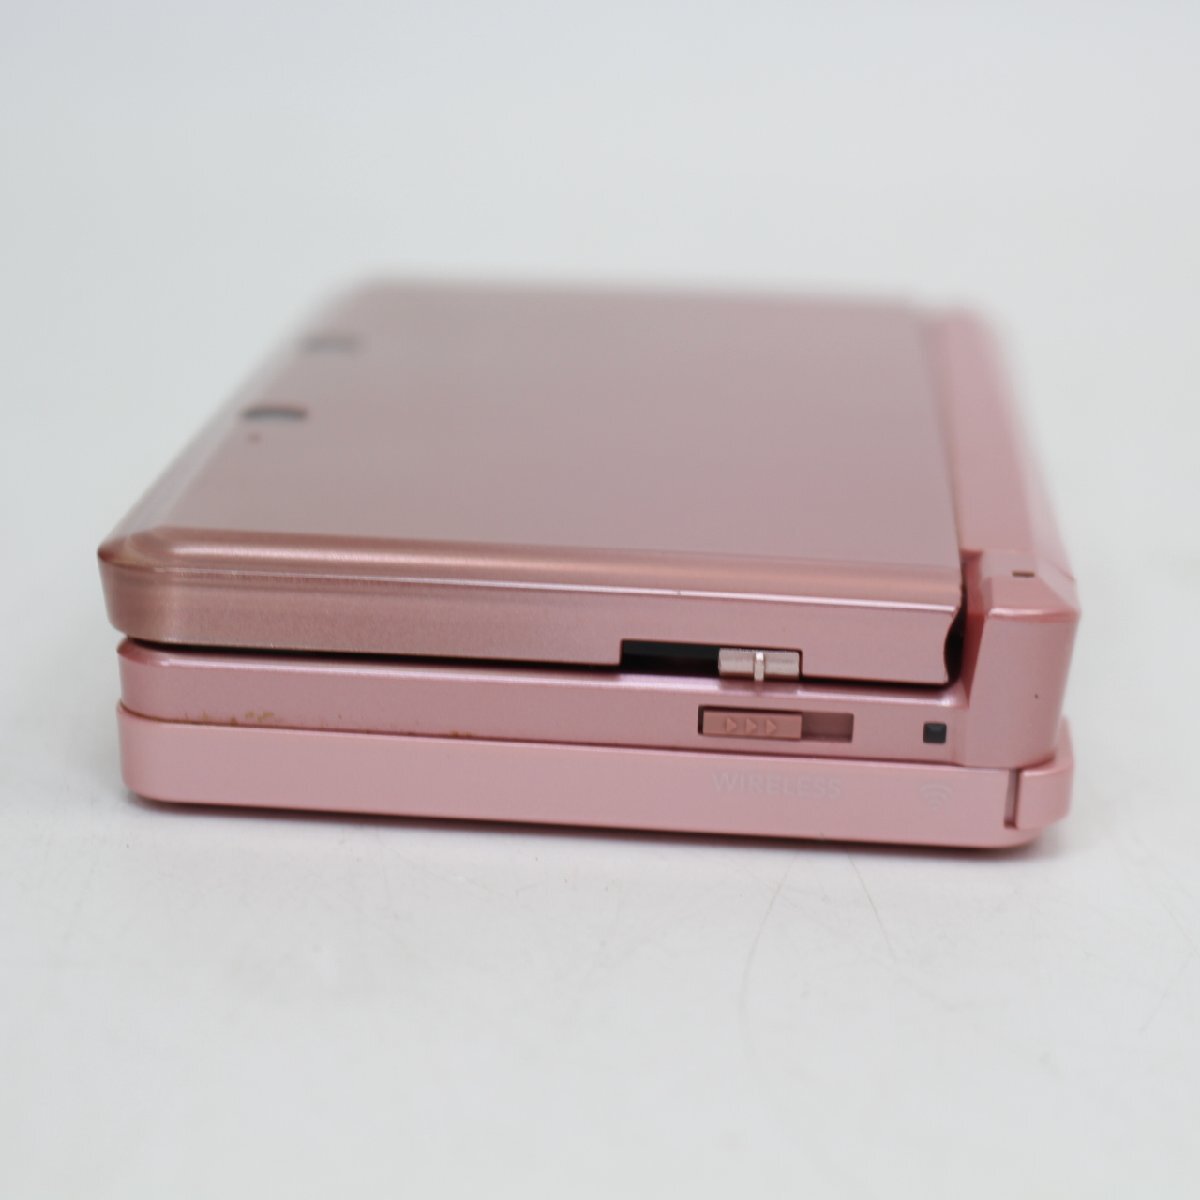 293)[1 jpy start!]NINTEND 3DS CTR-001 Nintendo game machine pink series body 